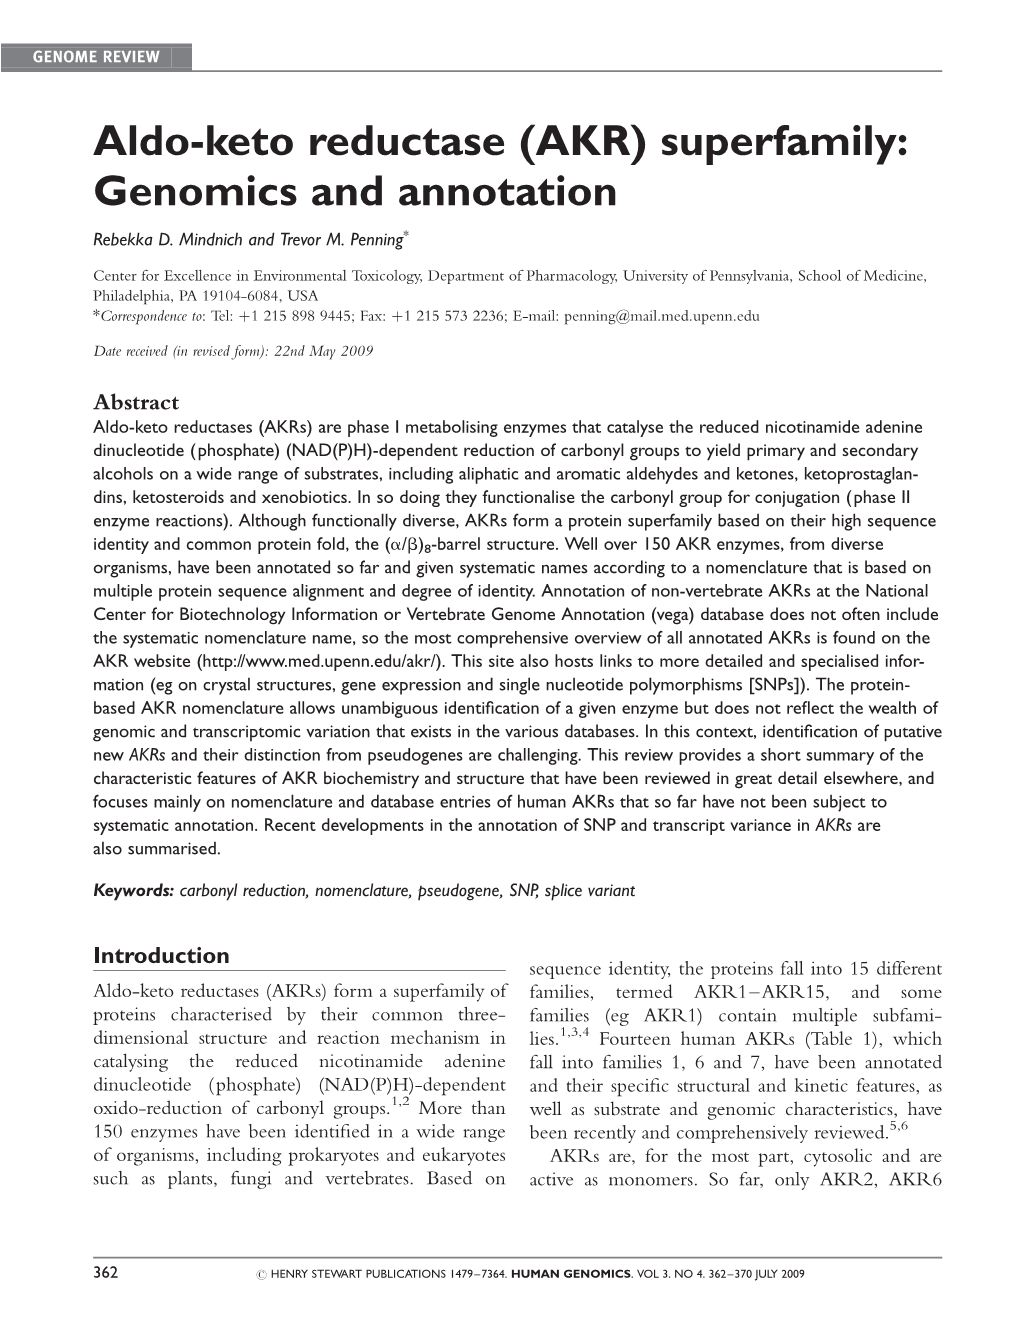 Aldo-Keto Reductase (AKR) Superfamily: Genomics and Annotation Rebekka D